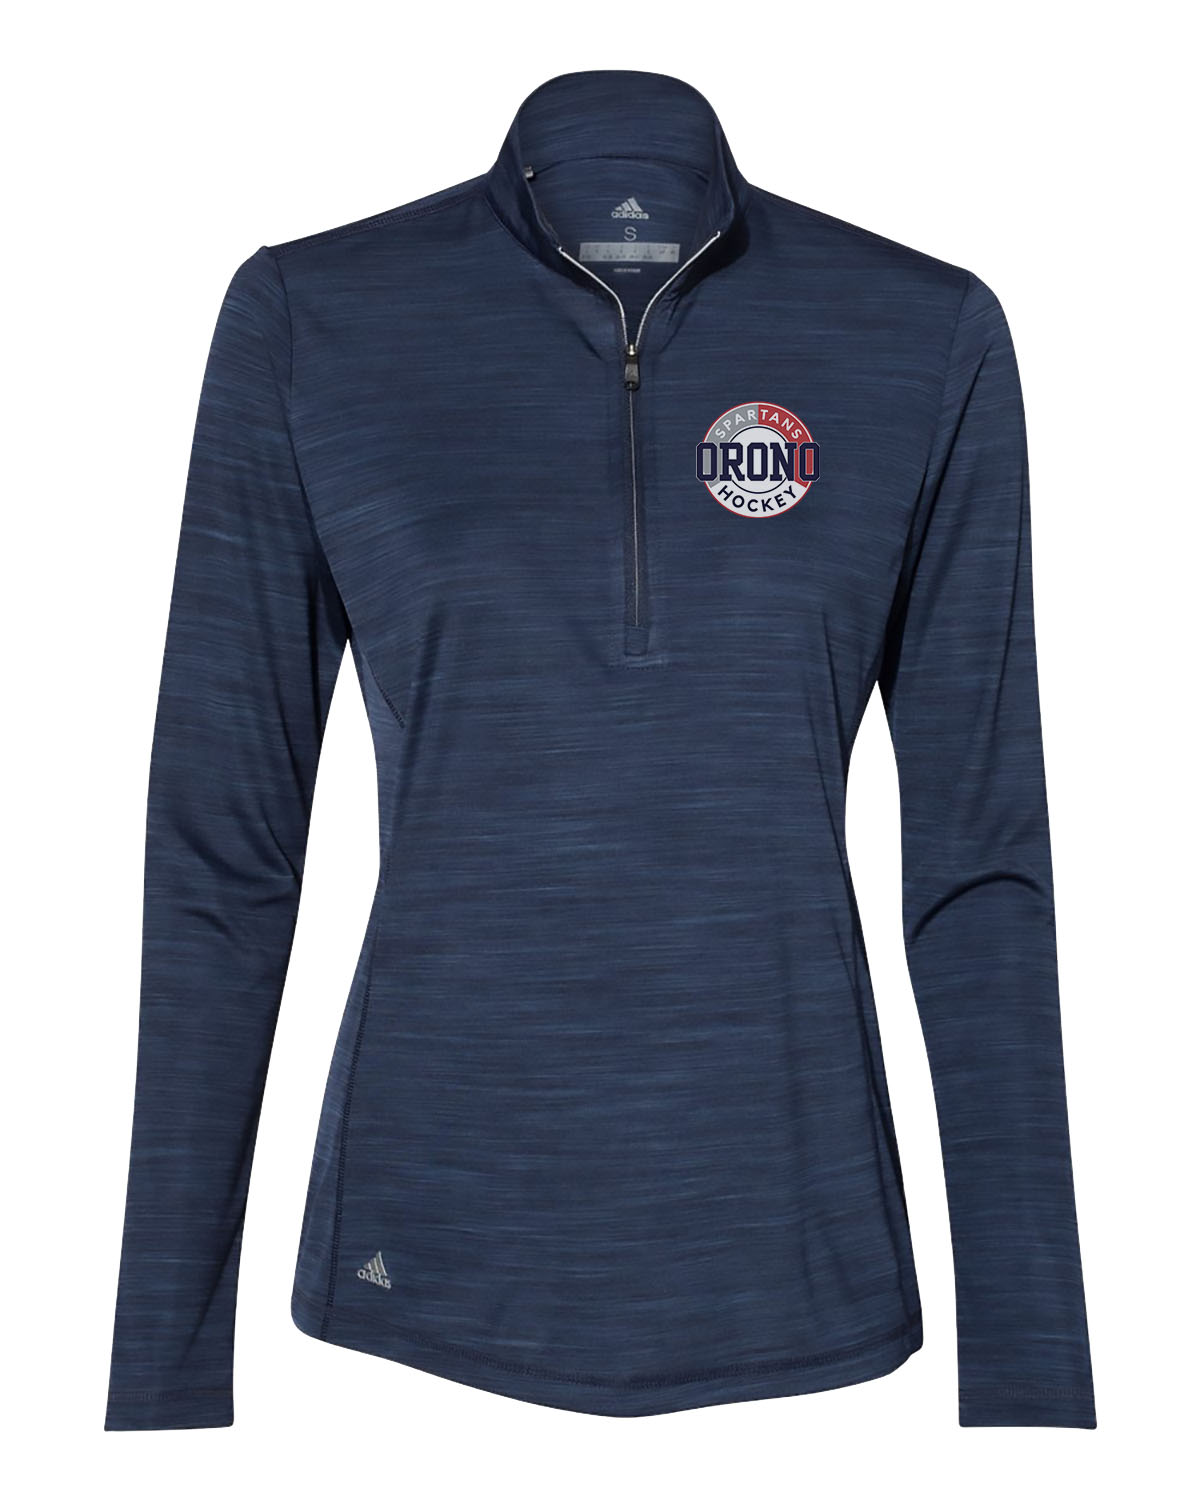 Orono Hockey // Women's Melange Pullover - Adidas